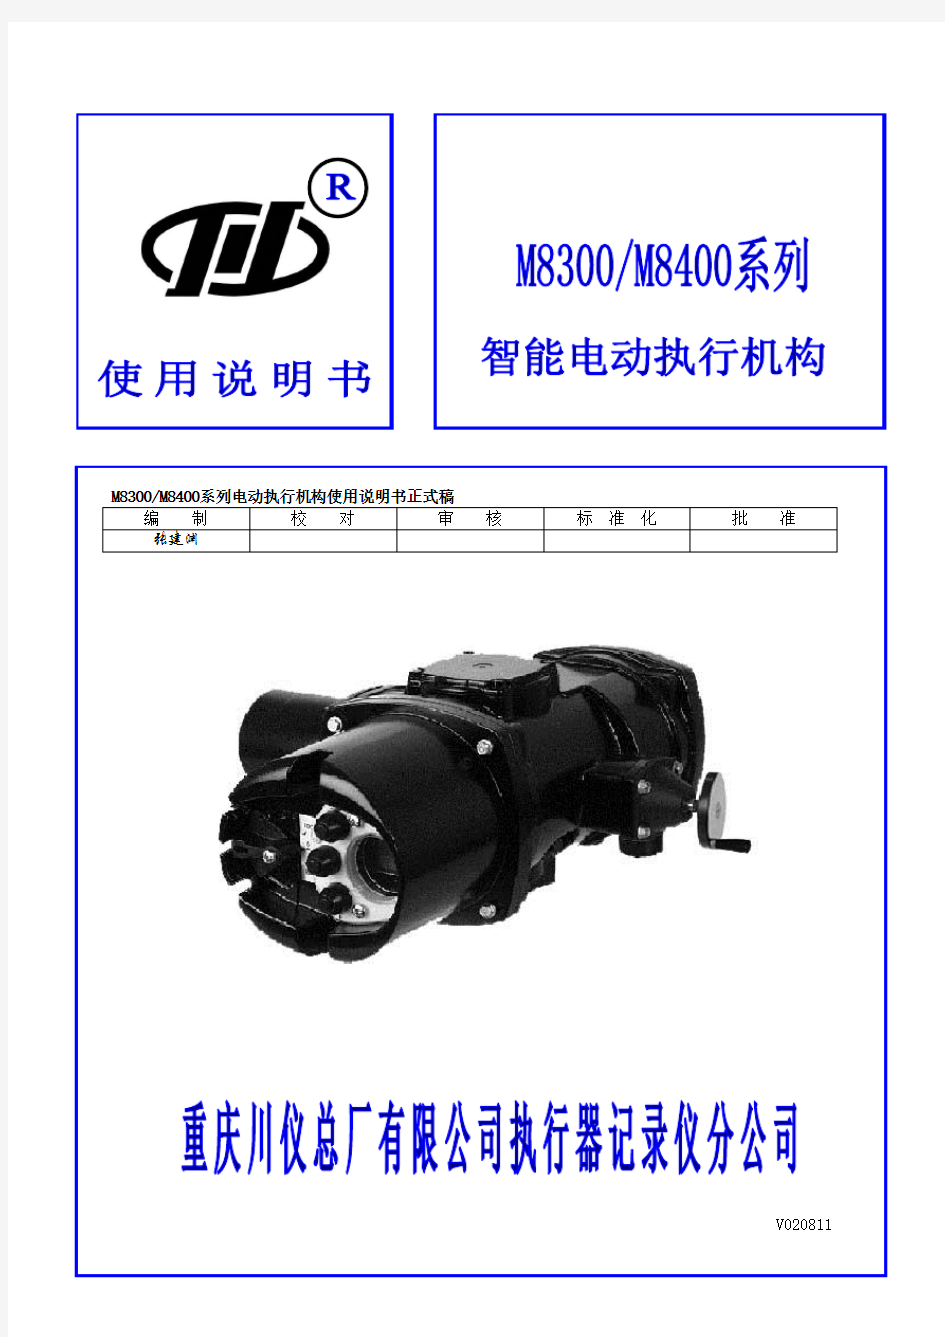 M8300 M8400系列智能电动执行机构说明书V020811